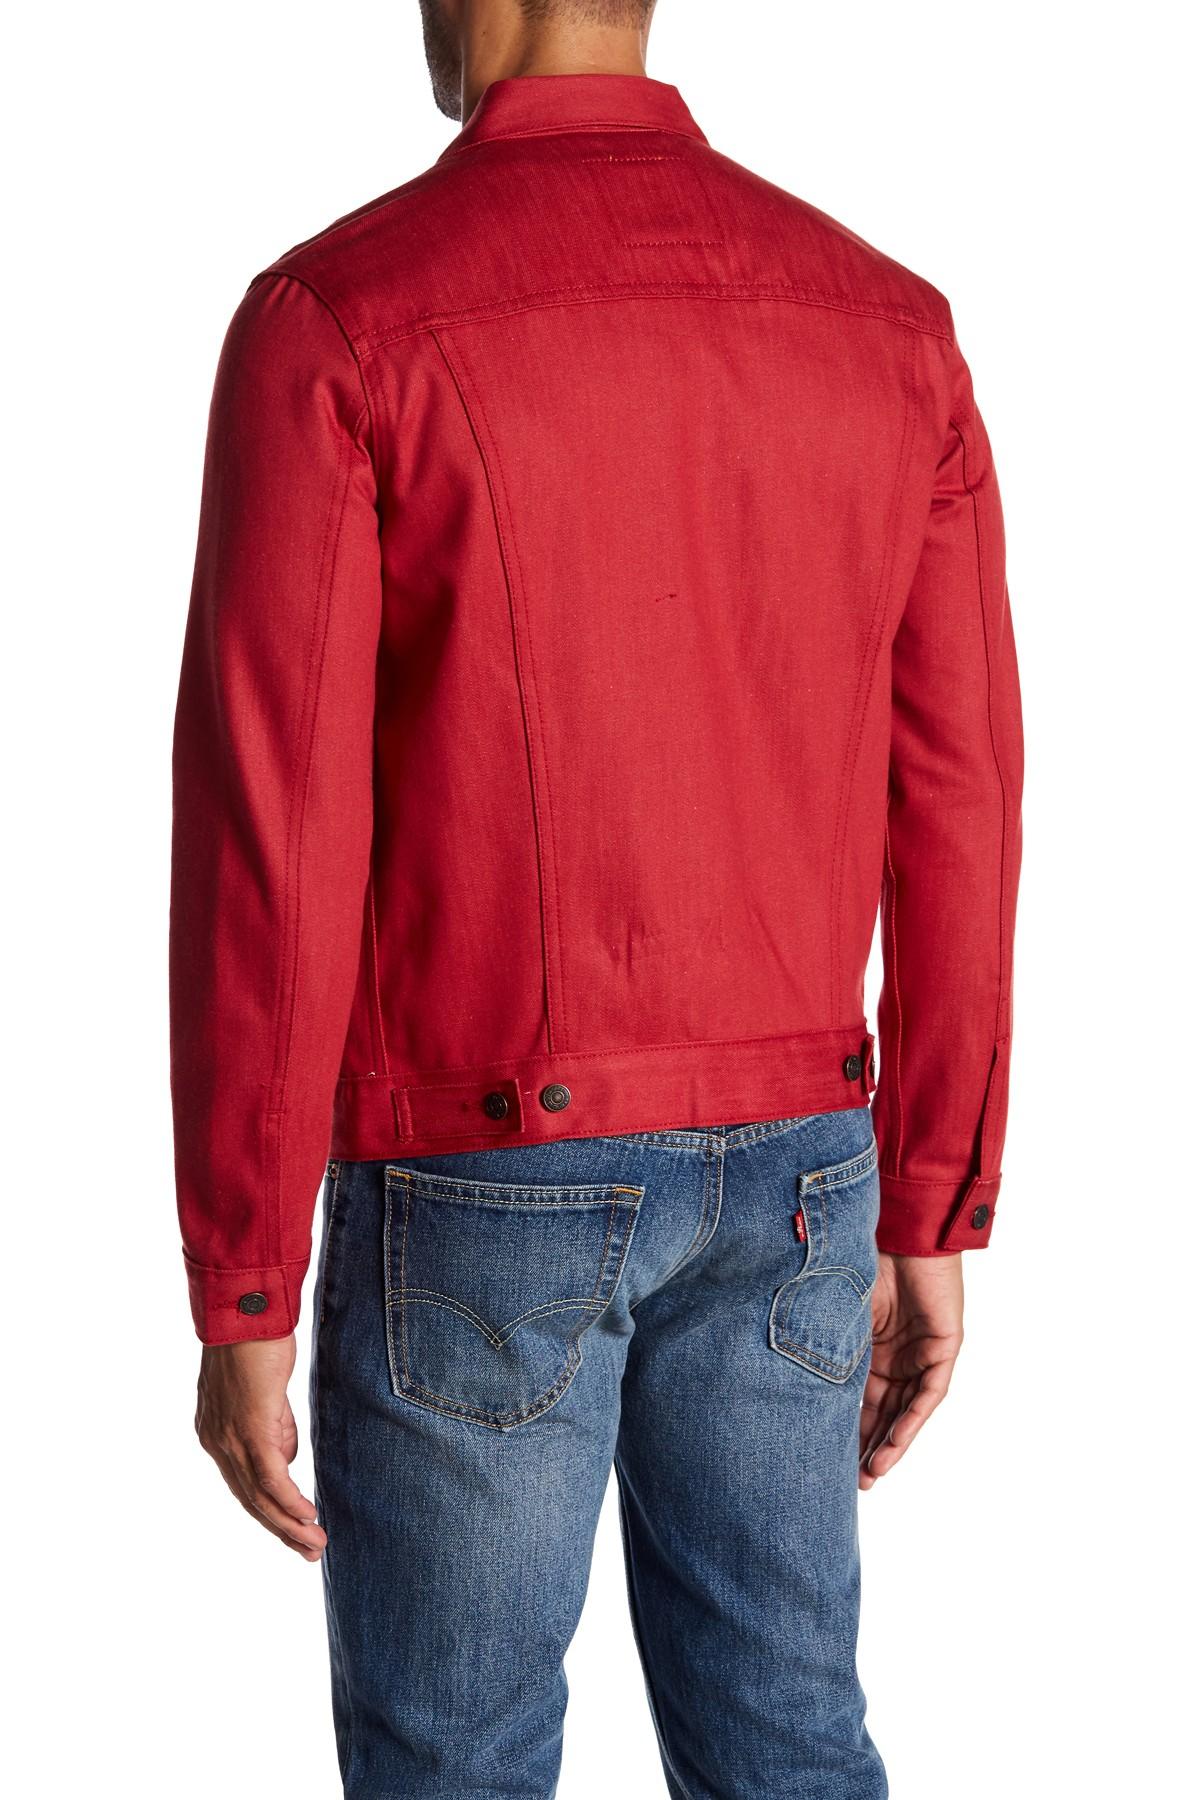 Levi's The Trucker Denim Jacket in Red 